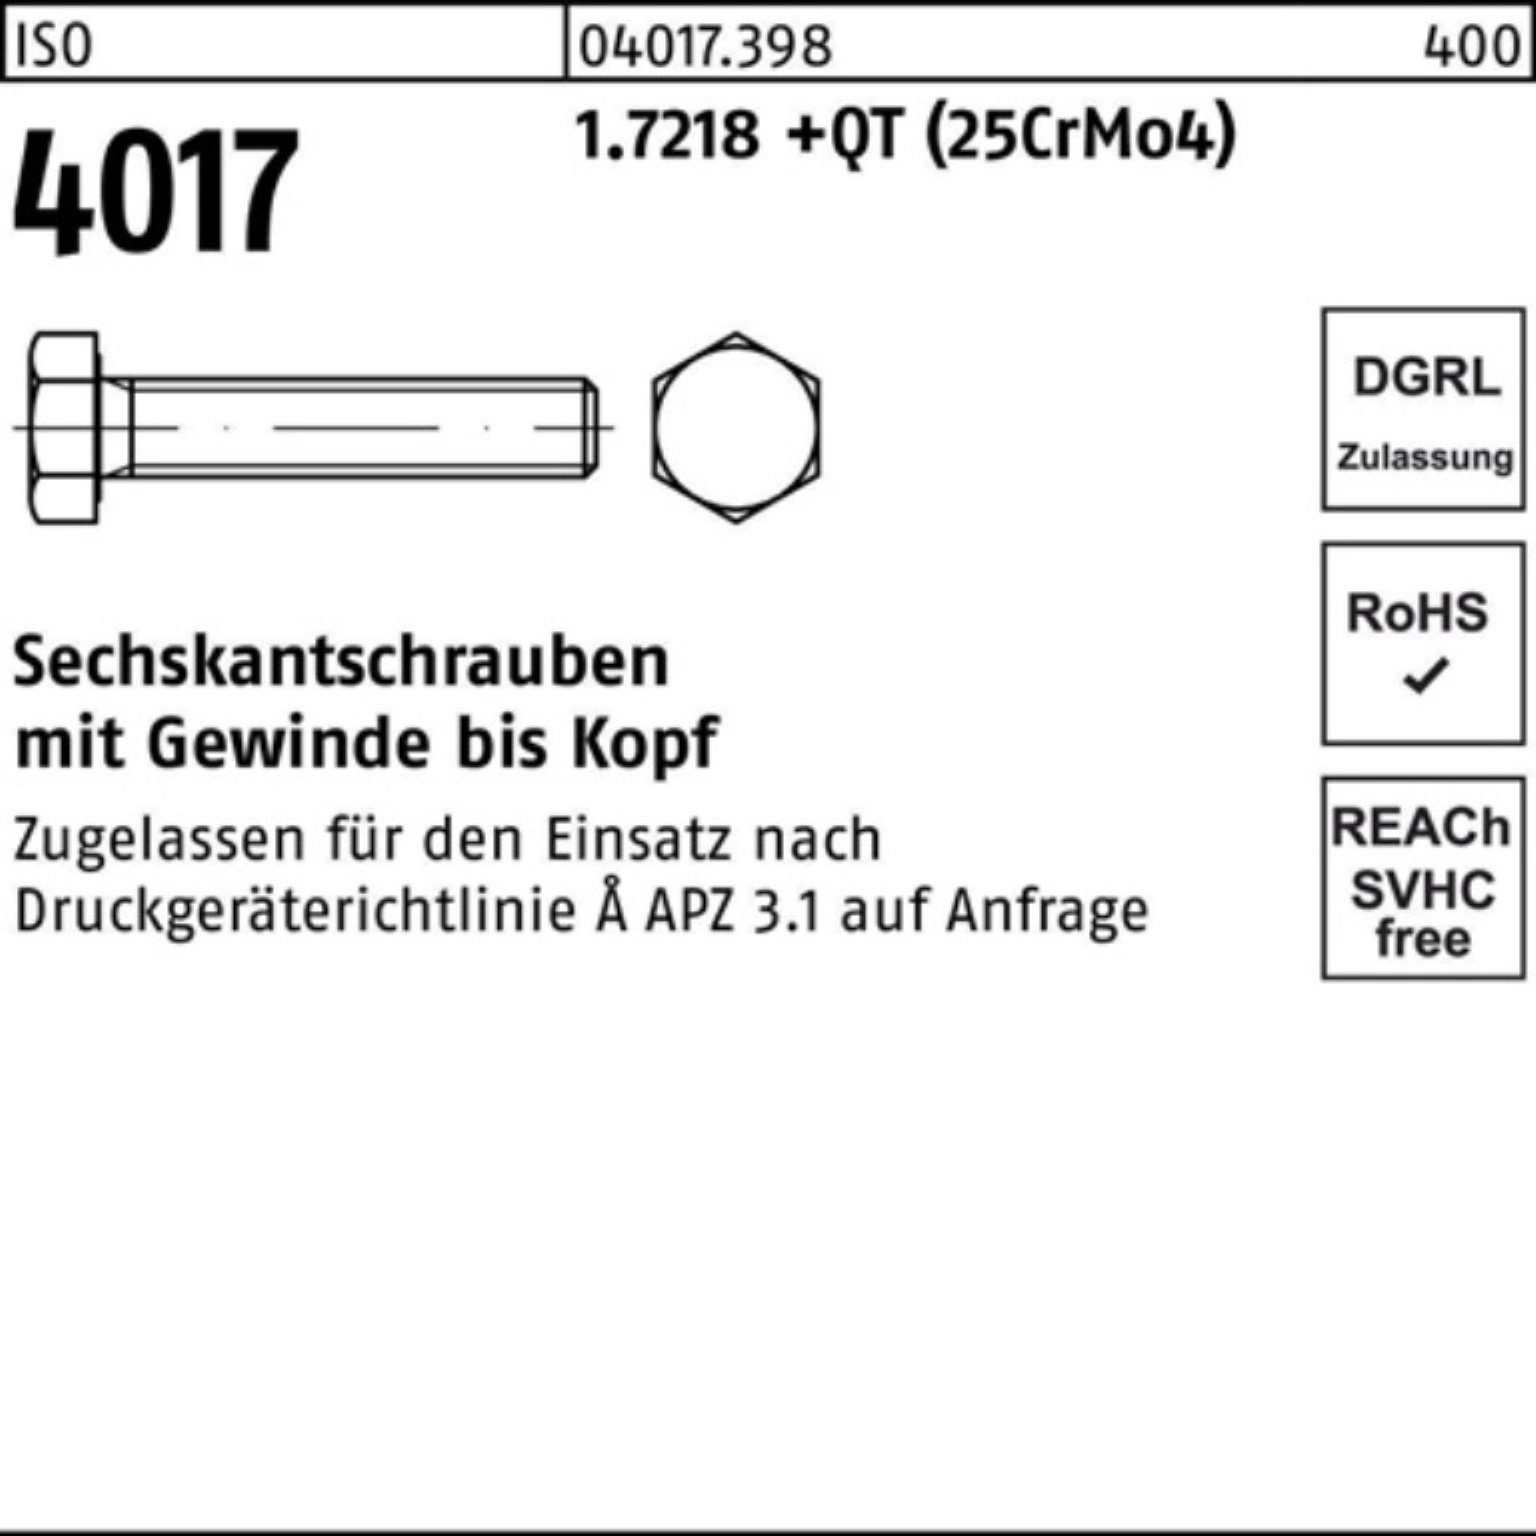 Bufab Sechskantschraube 100er Pack Sechskantschraube M24x 1.7218 ISO +QT VG 4017 (25CrMo4) 75